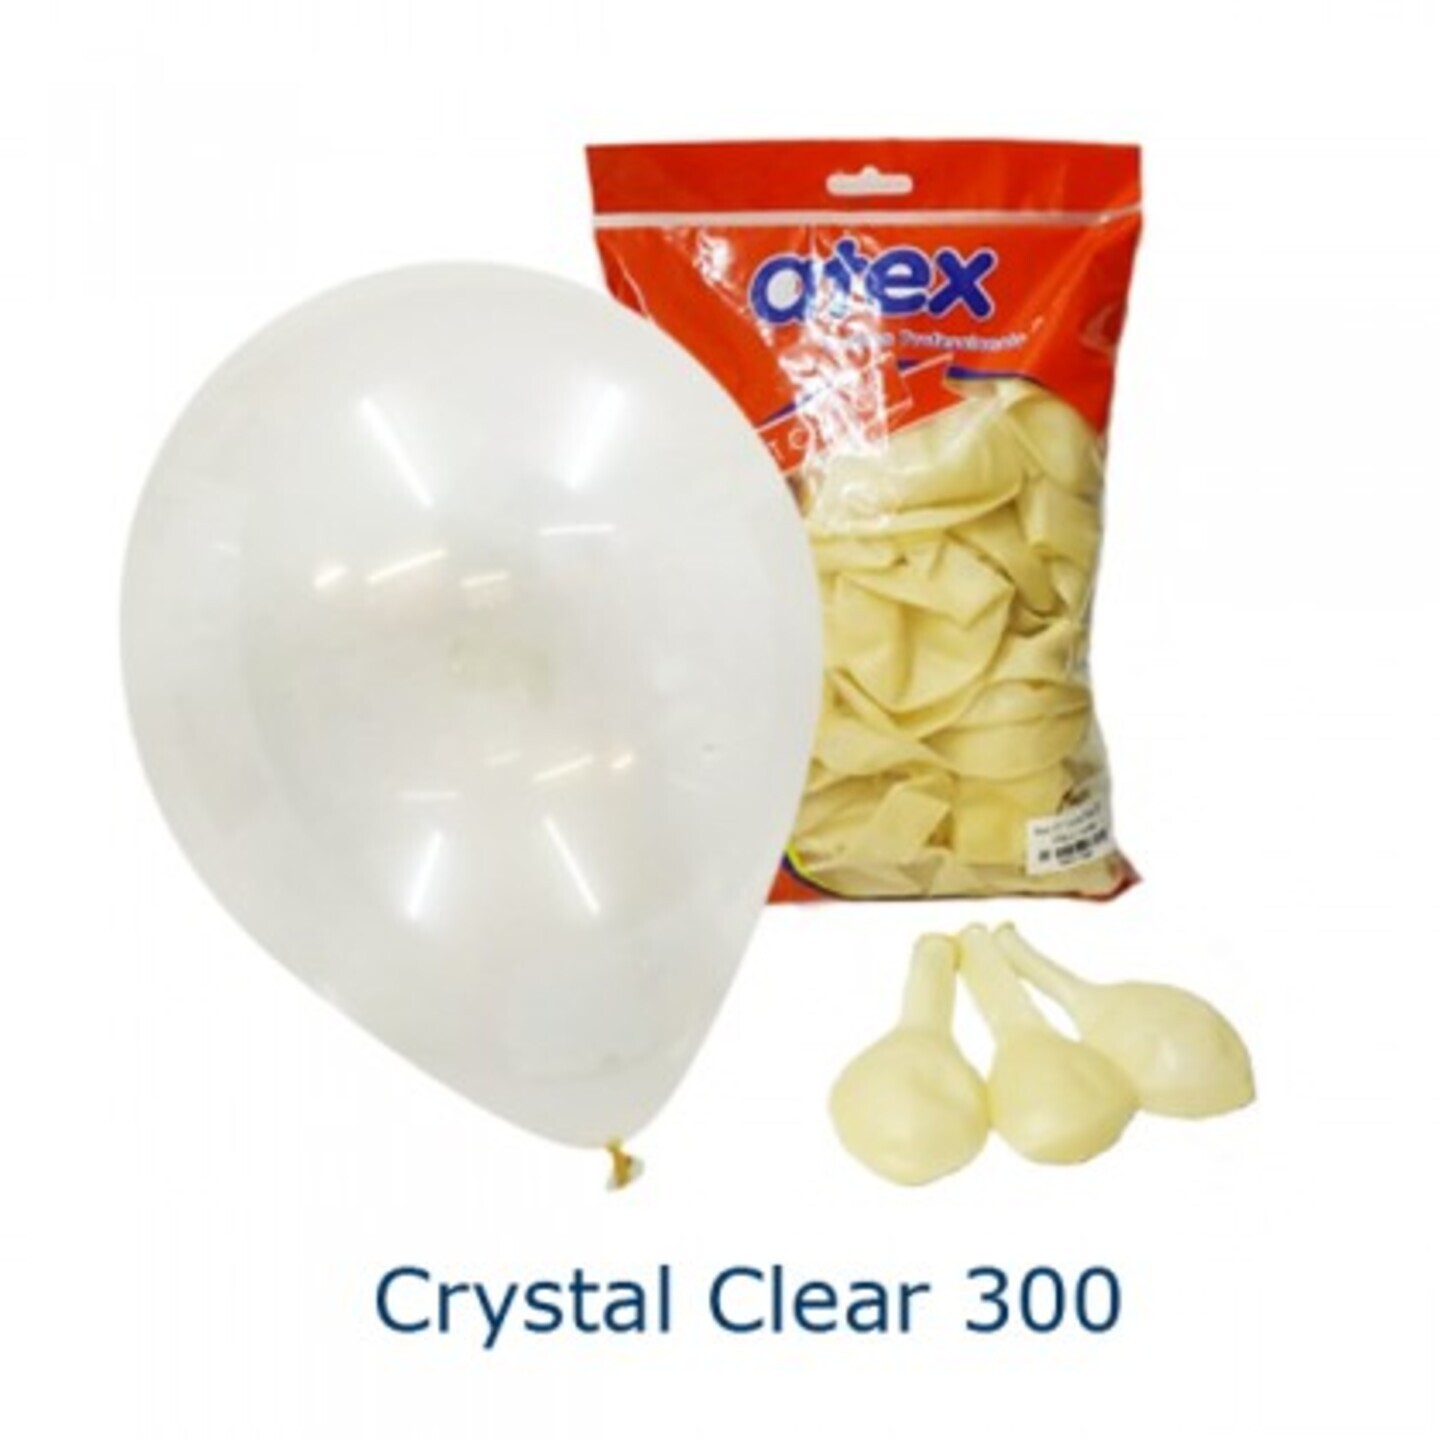 Crystal Clear 300